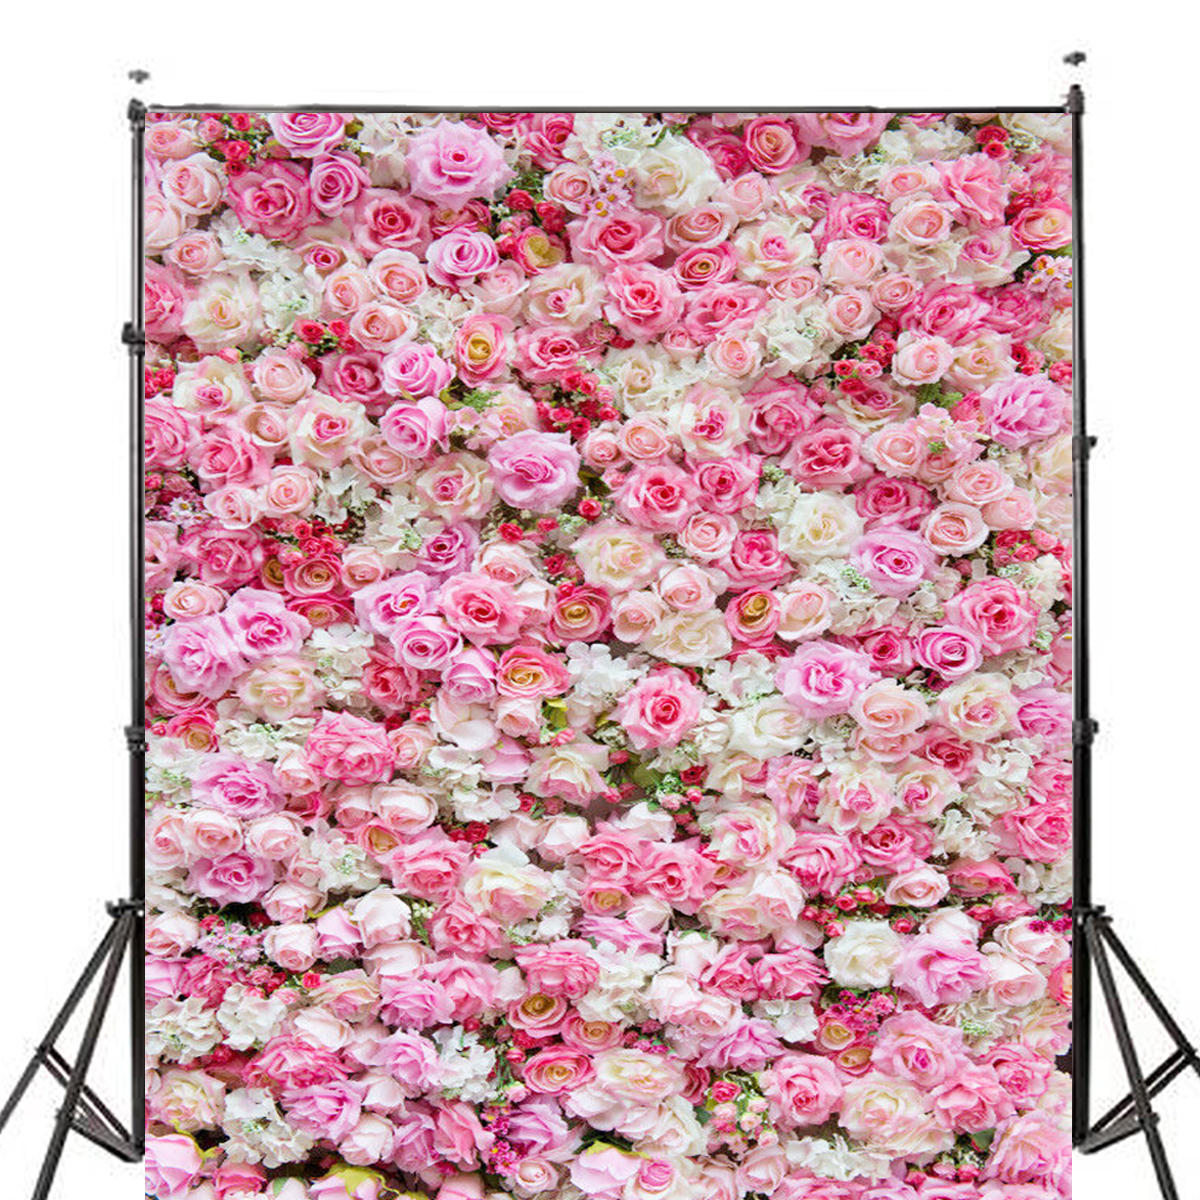 5x7FT Wedding Rose Flowers Photography Backdrop Studio Prop Background